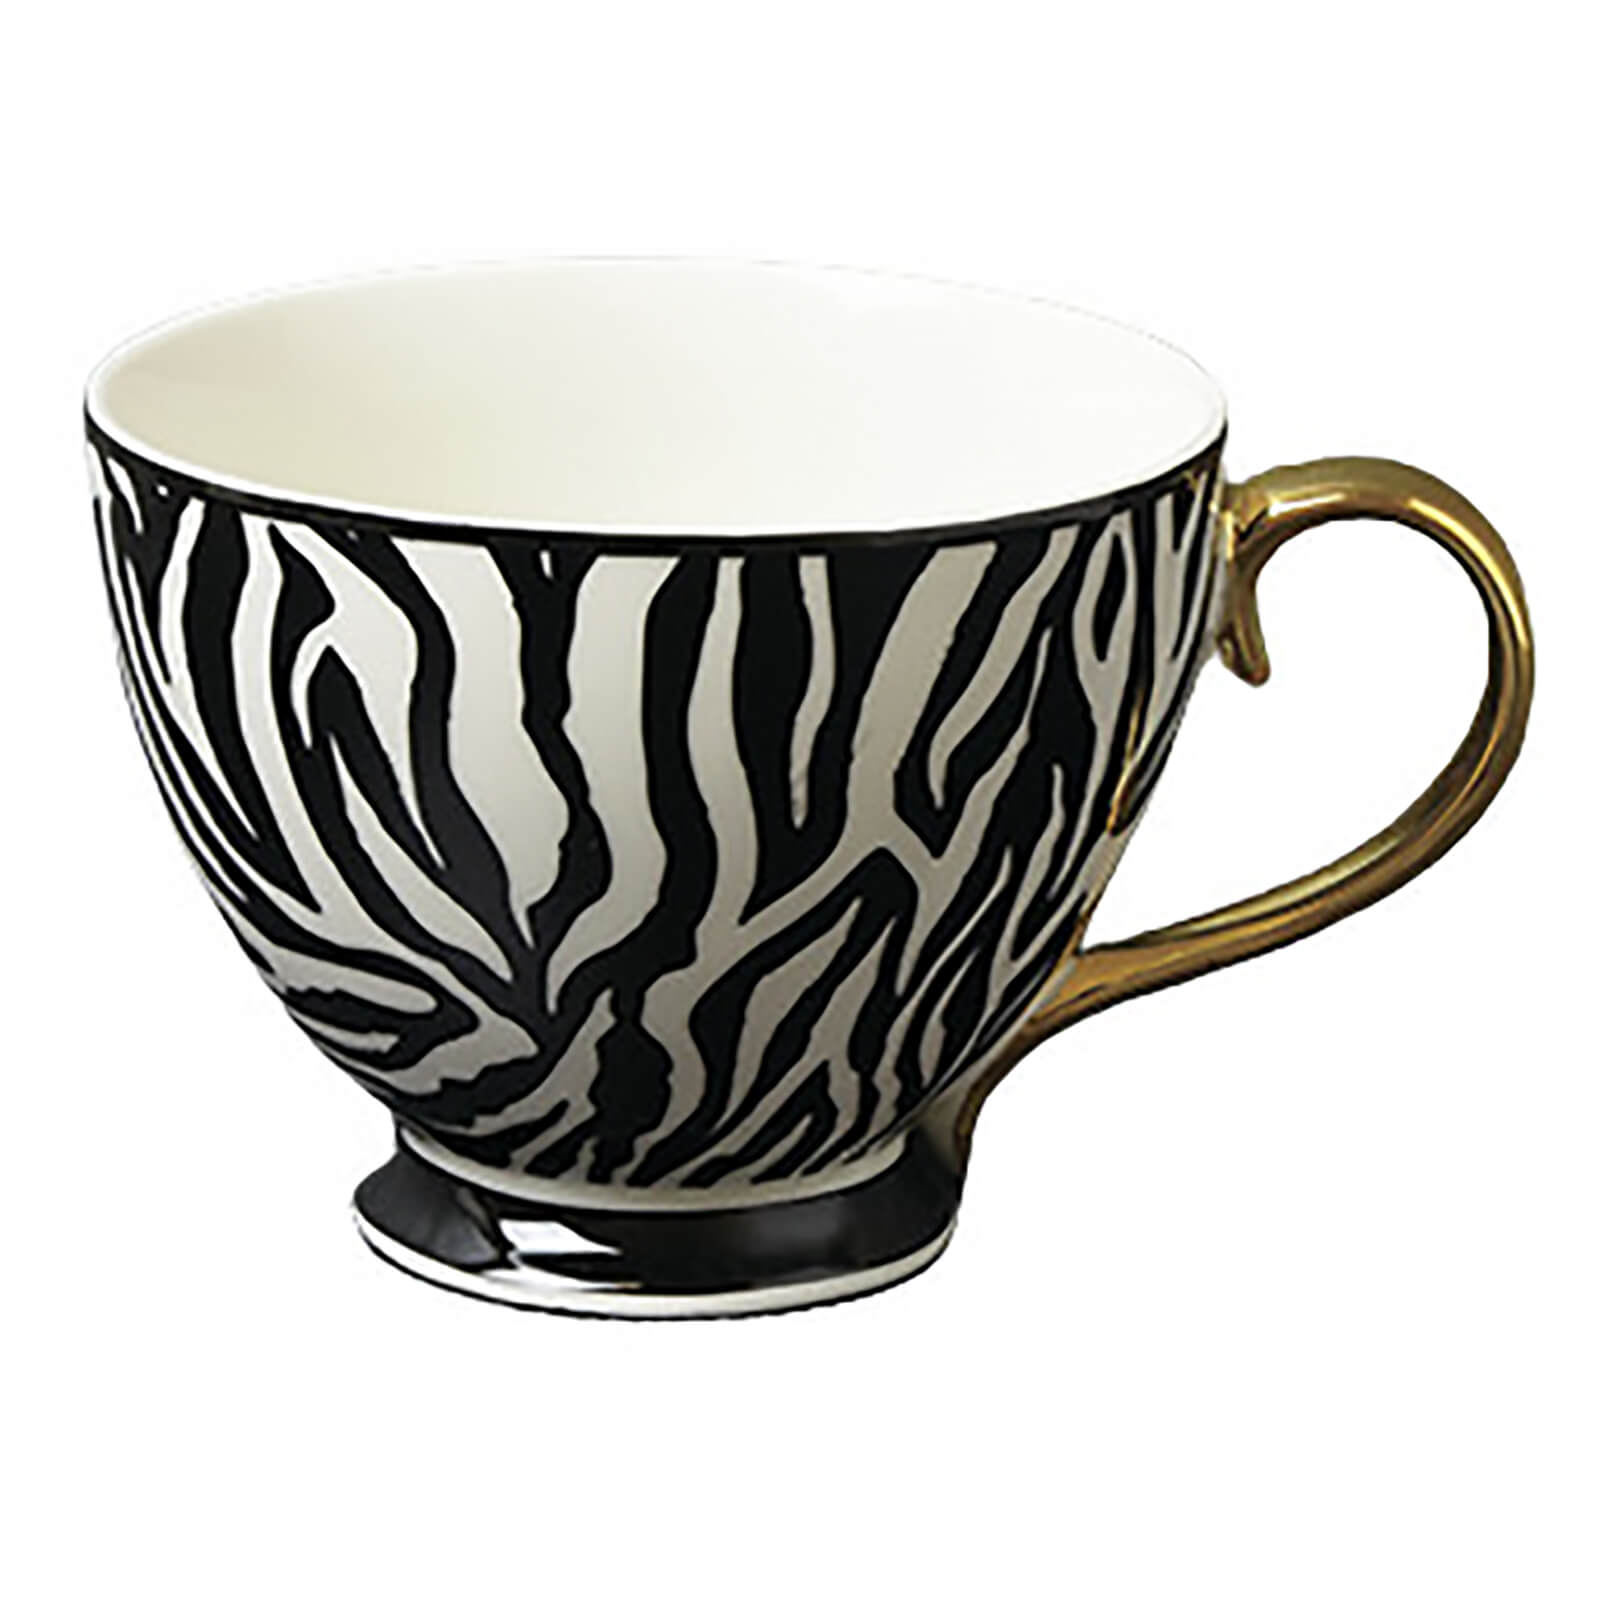 Zebra Print Porcelain Mug with Gold Handle